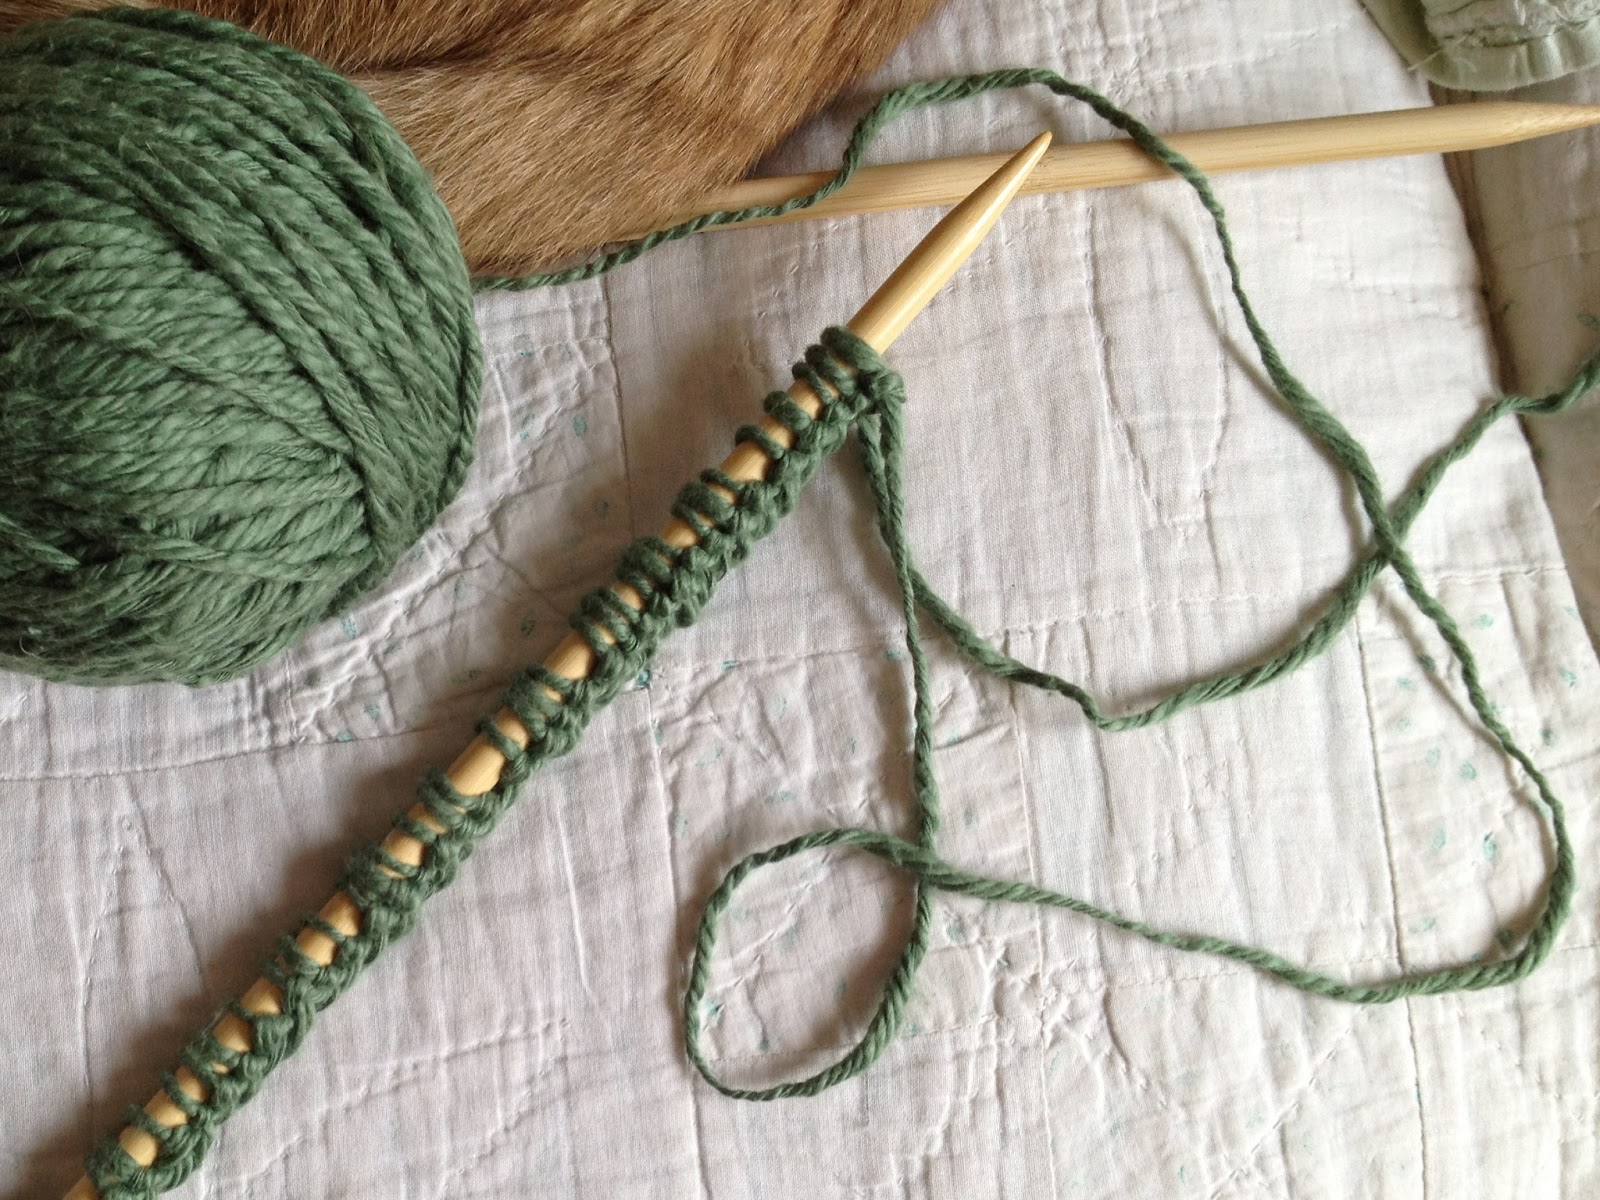 Easy infinity scarf knitting pattern straight needles